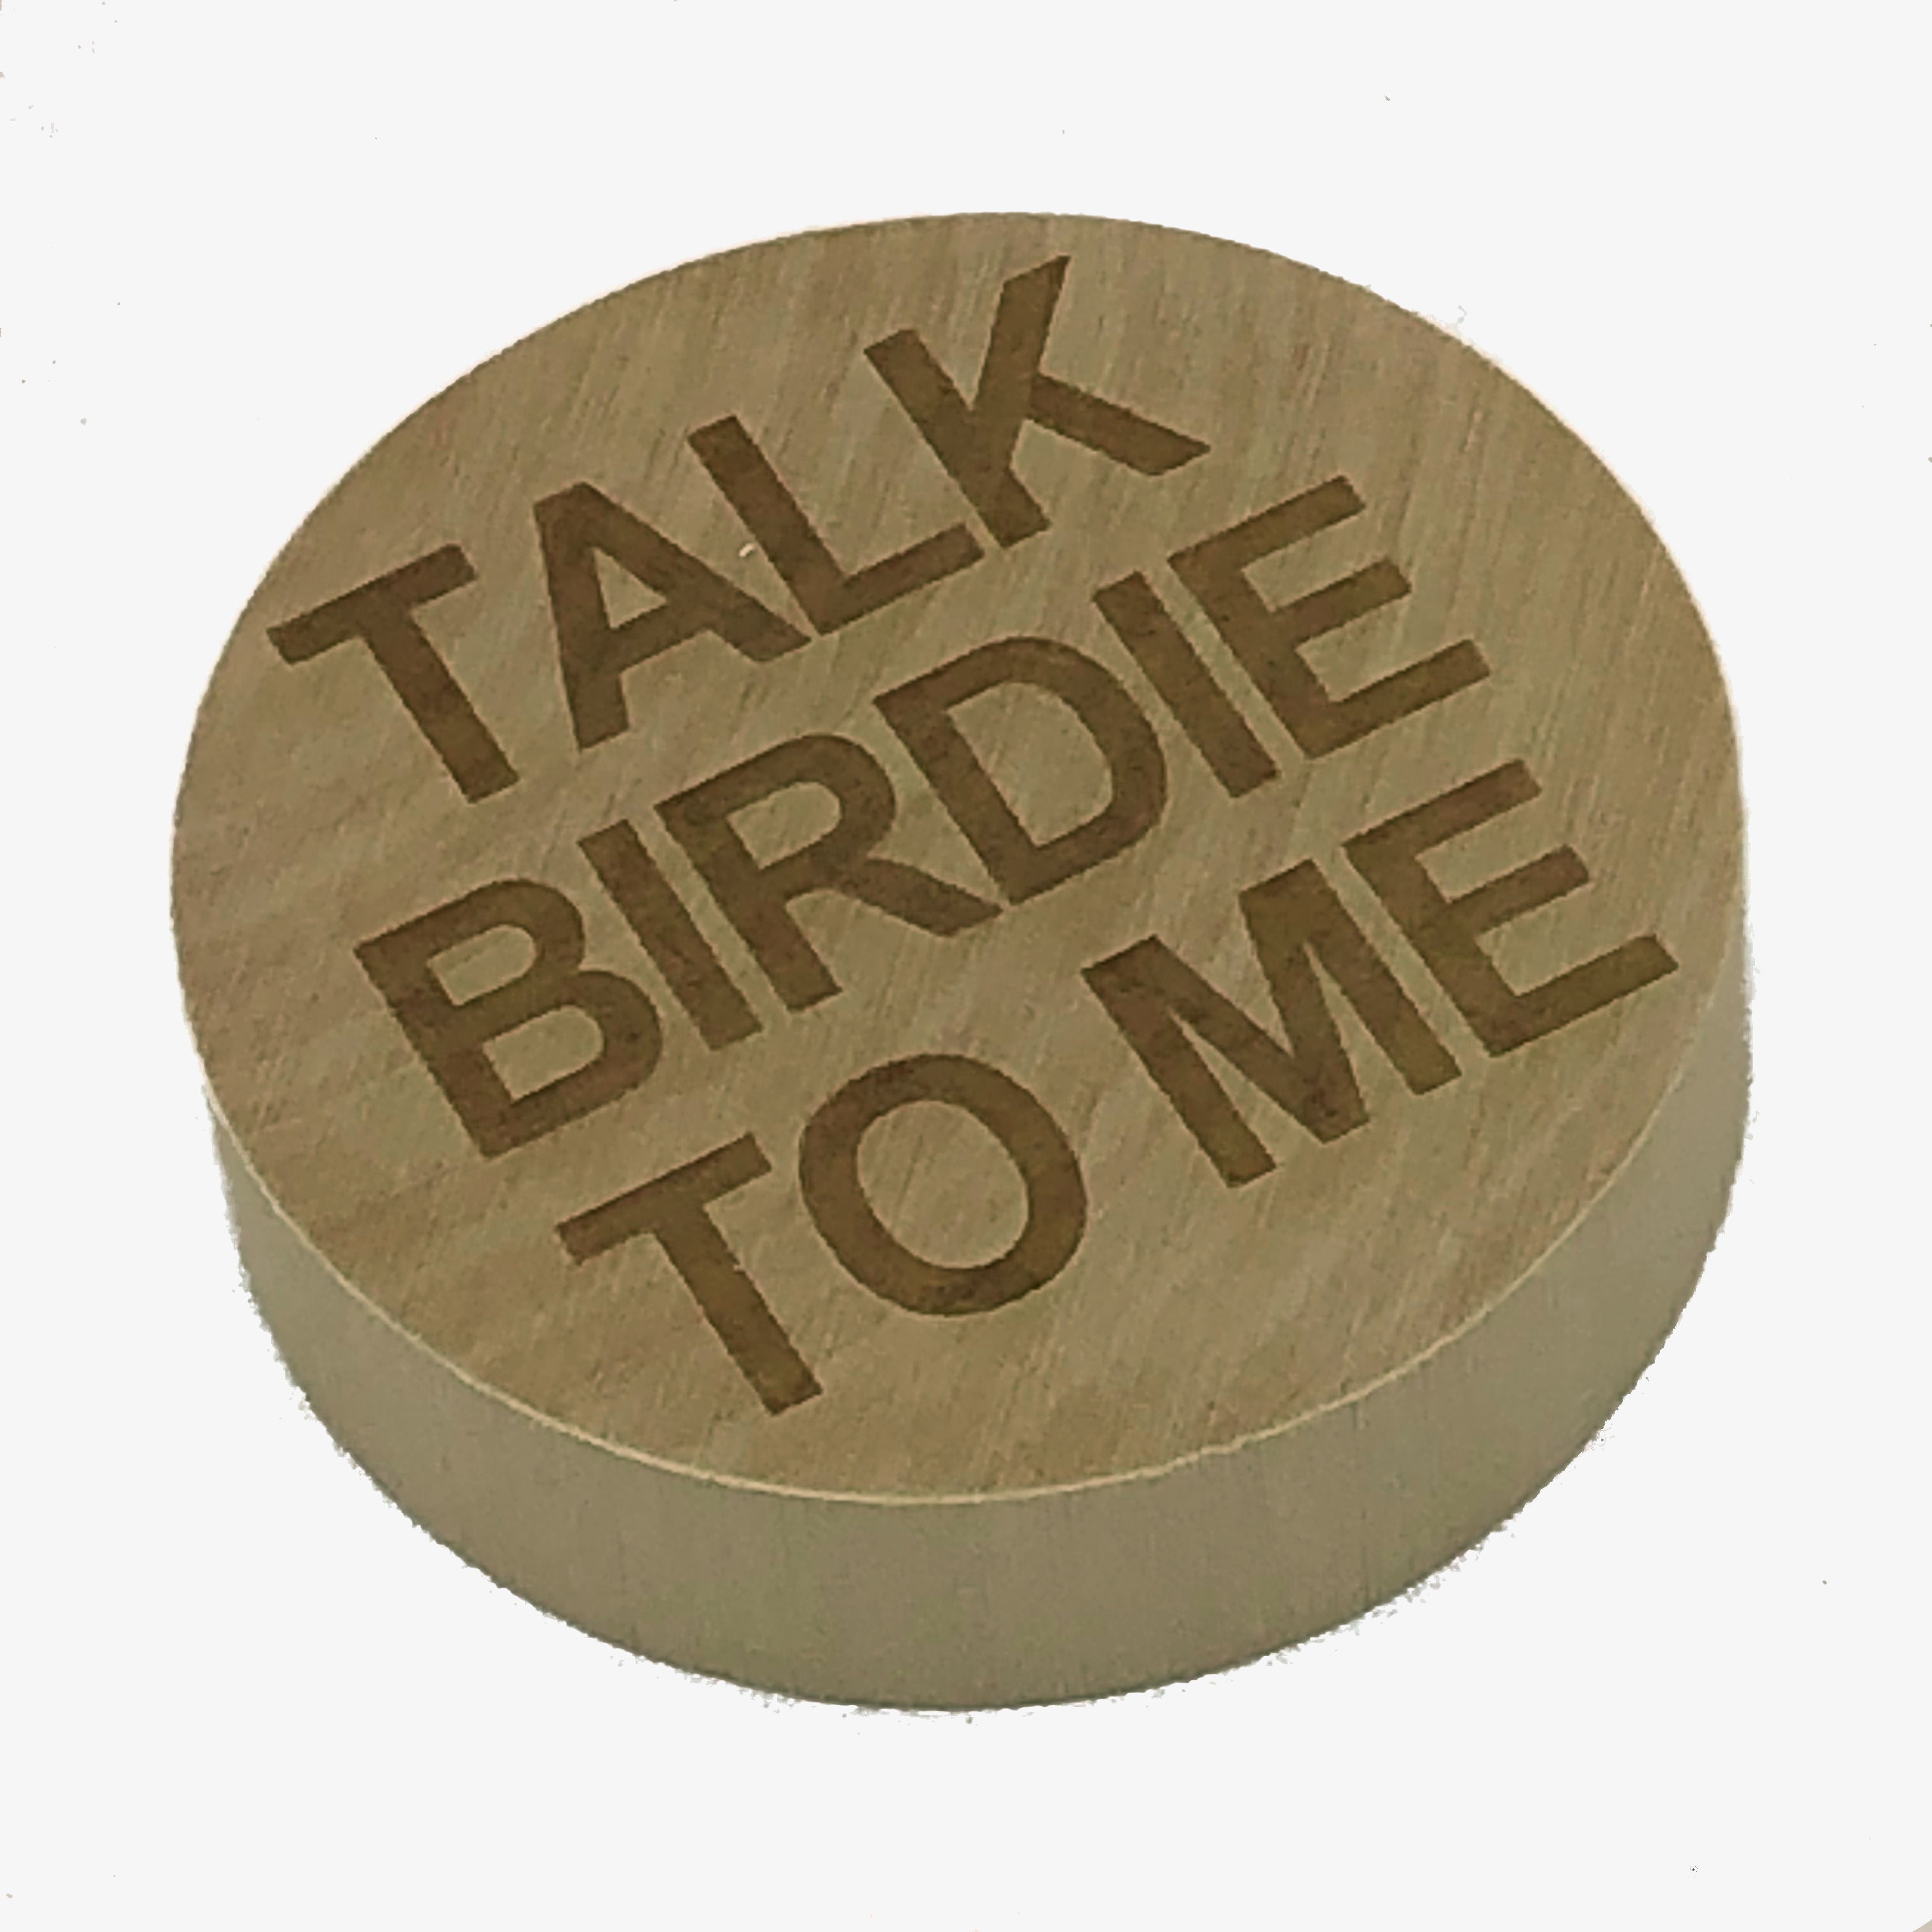  wooden bottle opener - golf - talk birdie to me